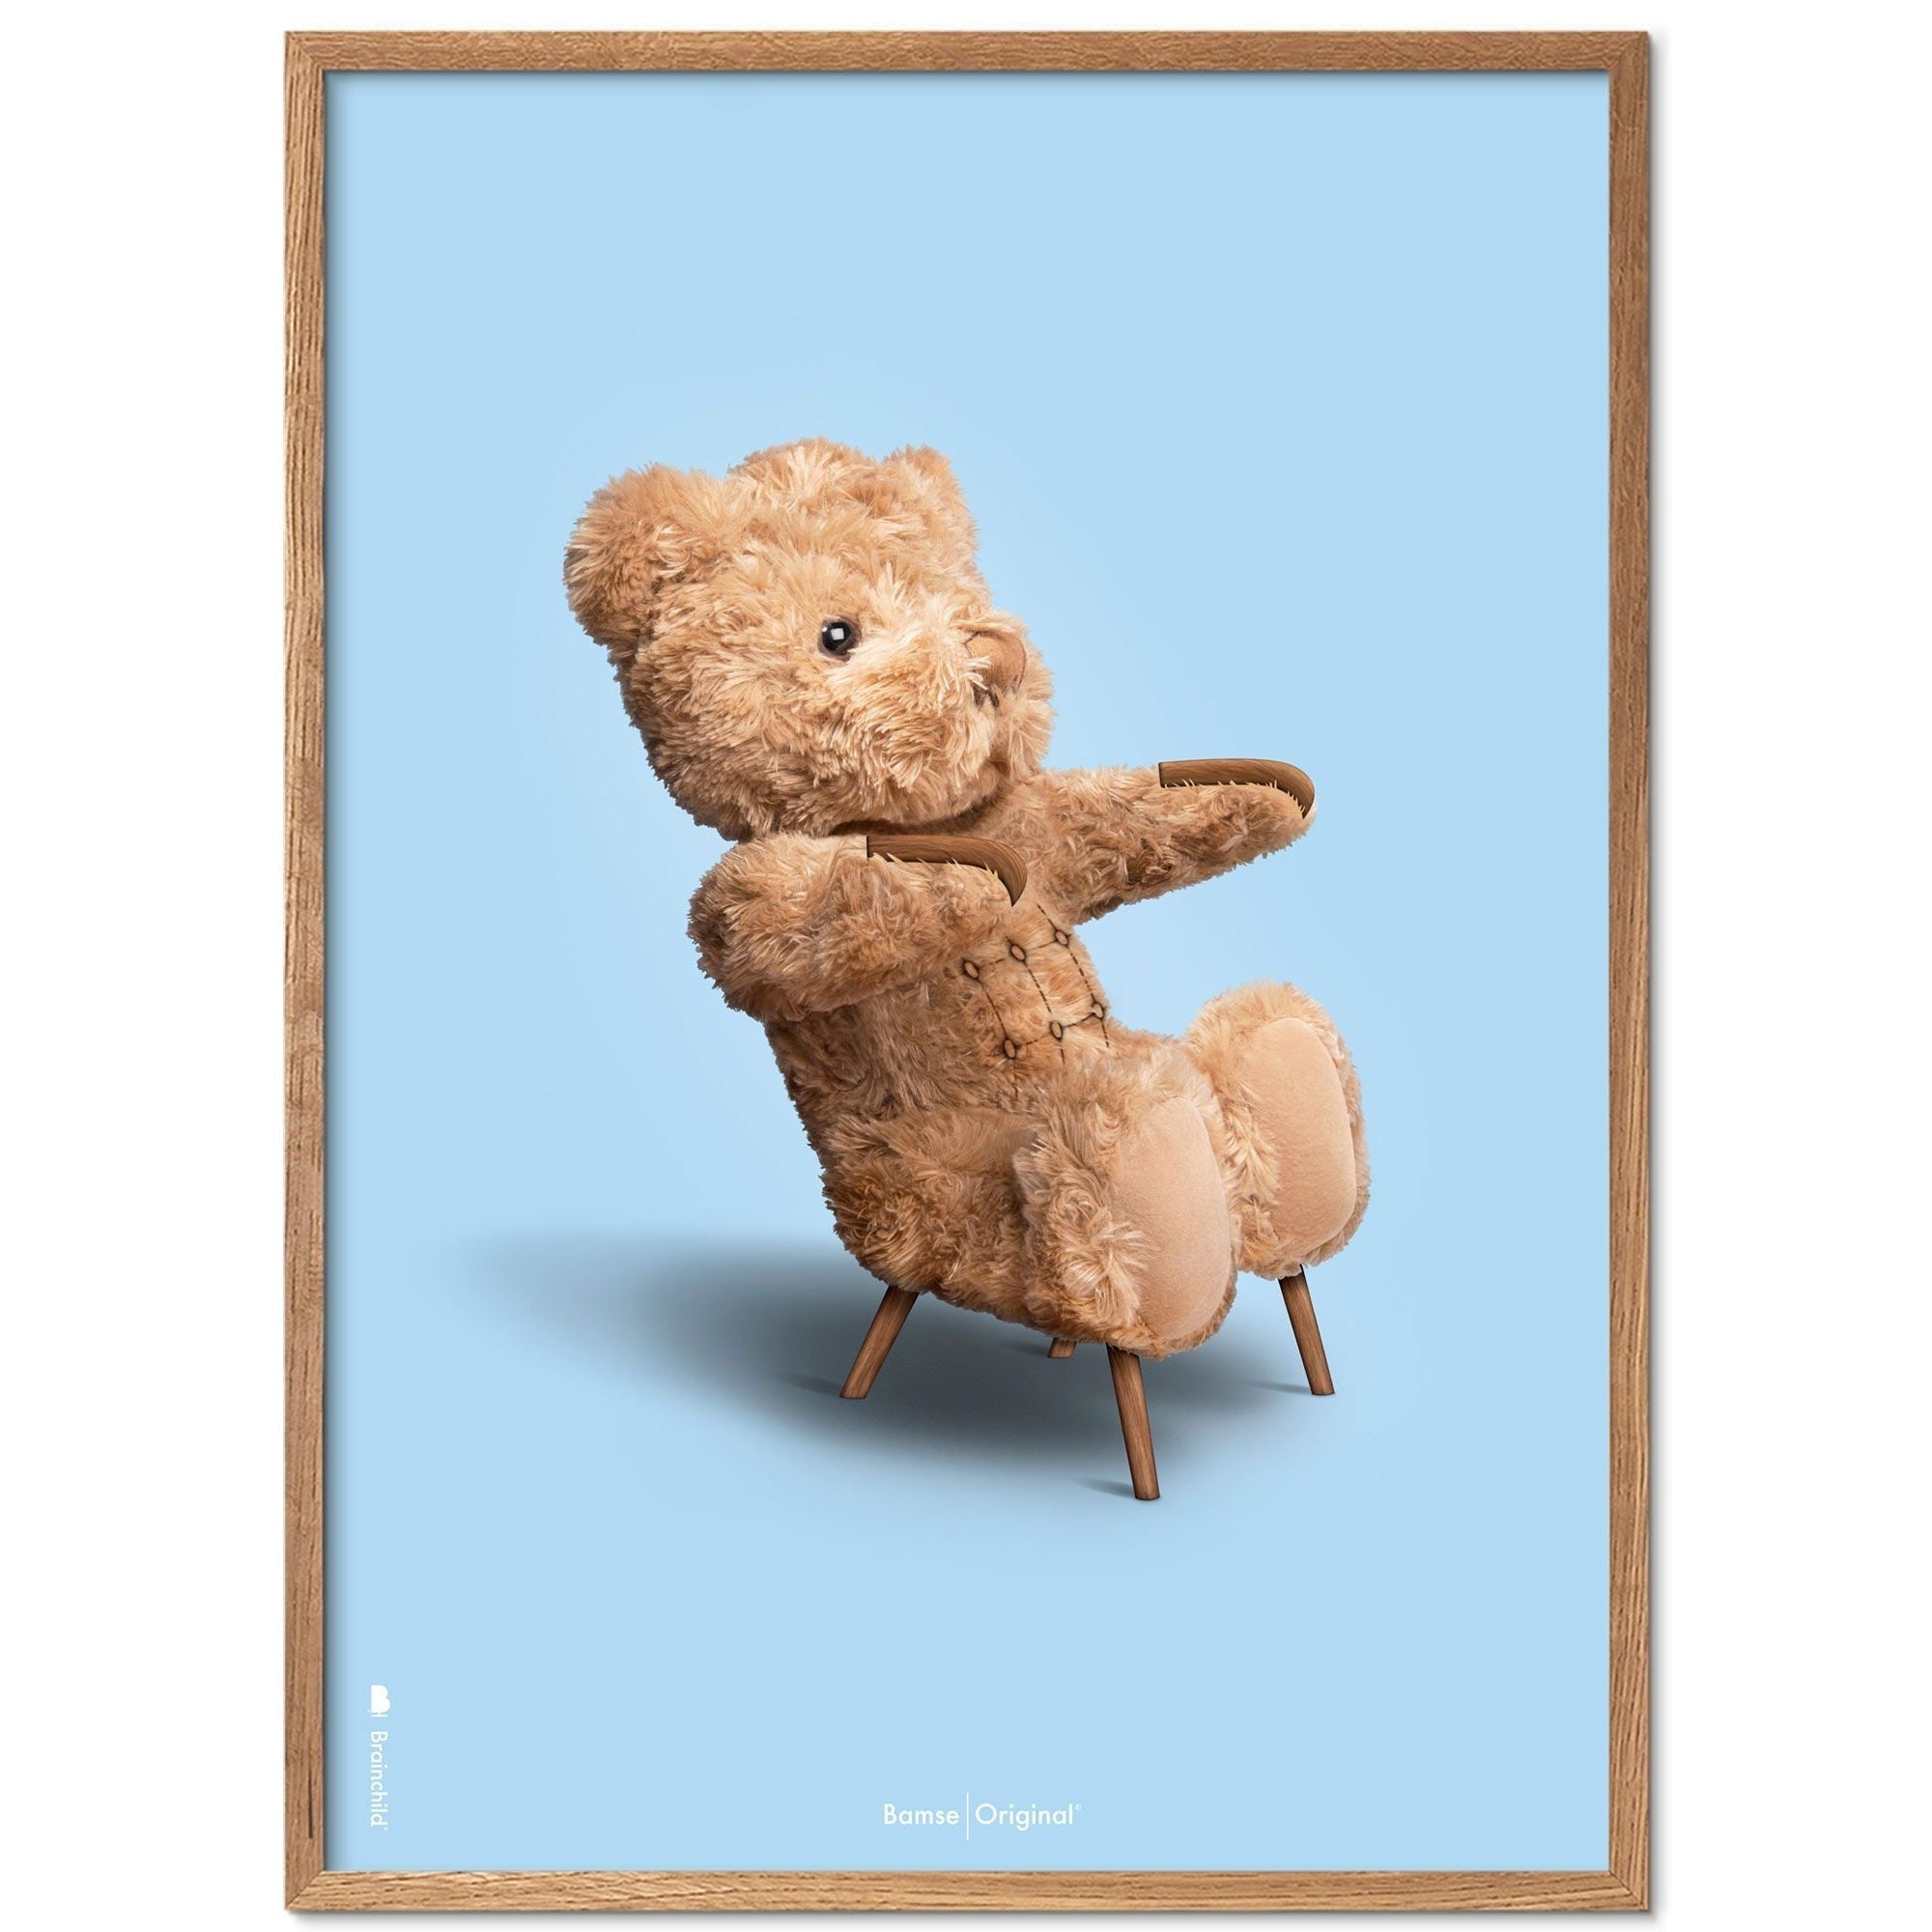 Brainchild Teddy Bear Classic Poster Frame Made Of Light Wood Ramme 50x70 Cm, Light Blue Background